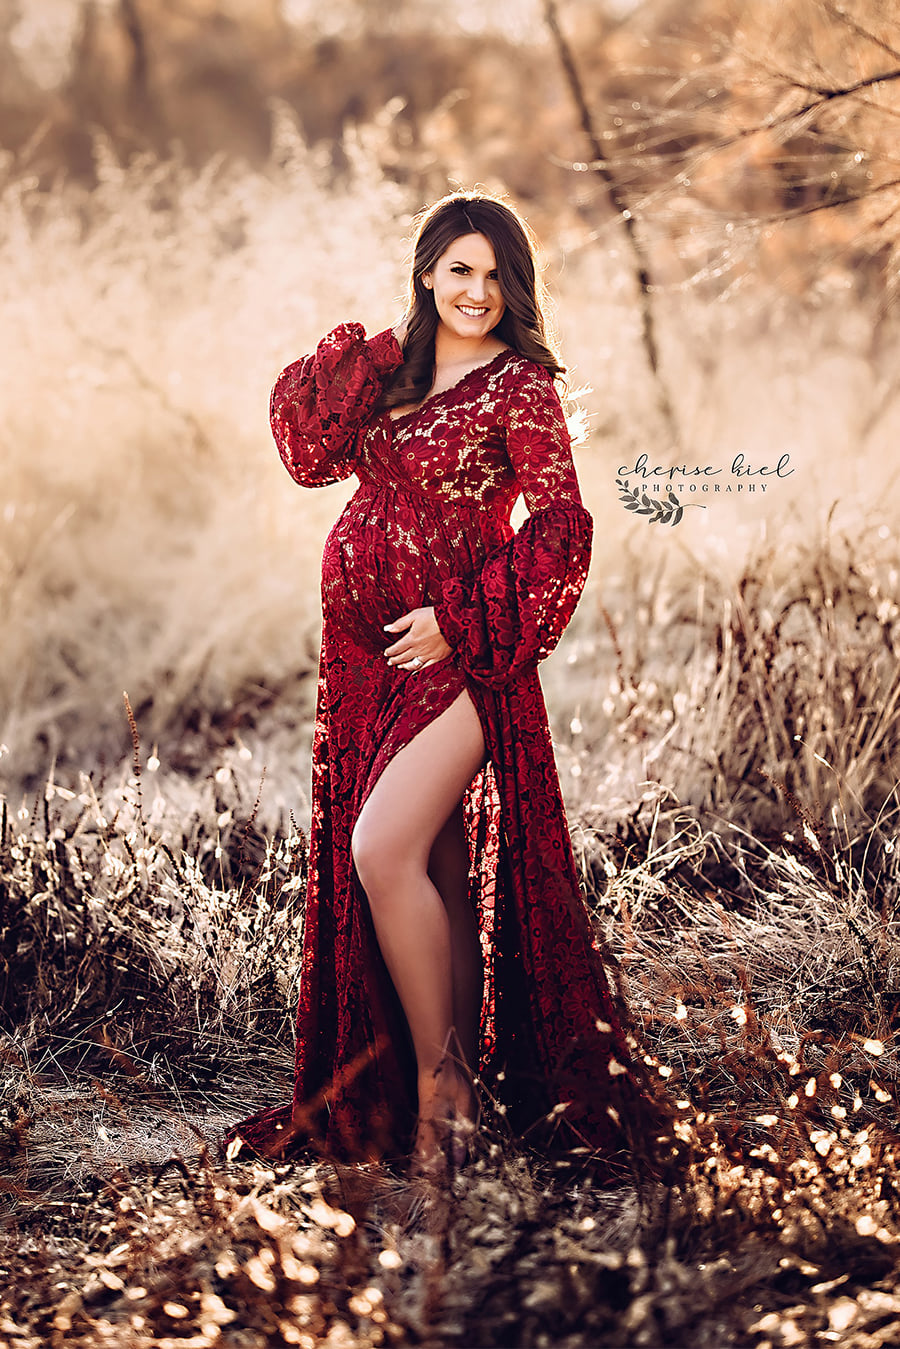 Red Lace Sunflower Dress - maternity photoshoot dress